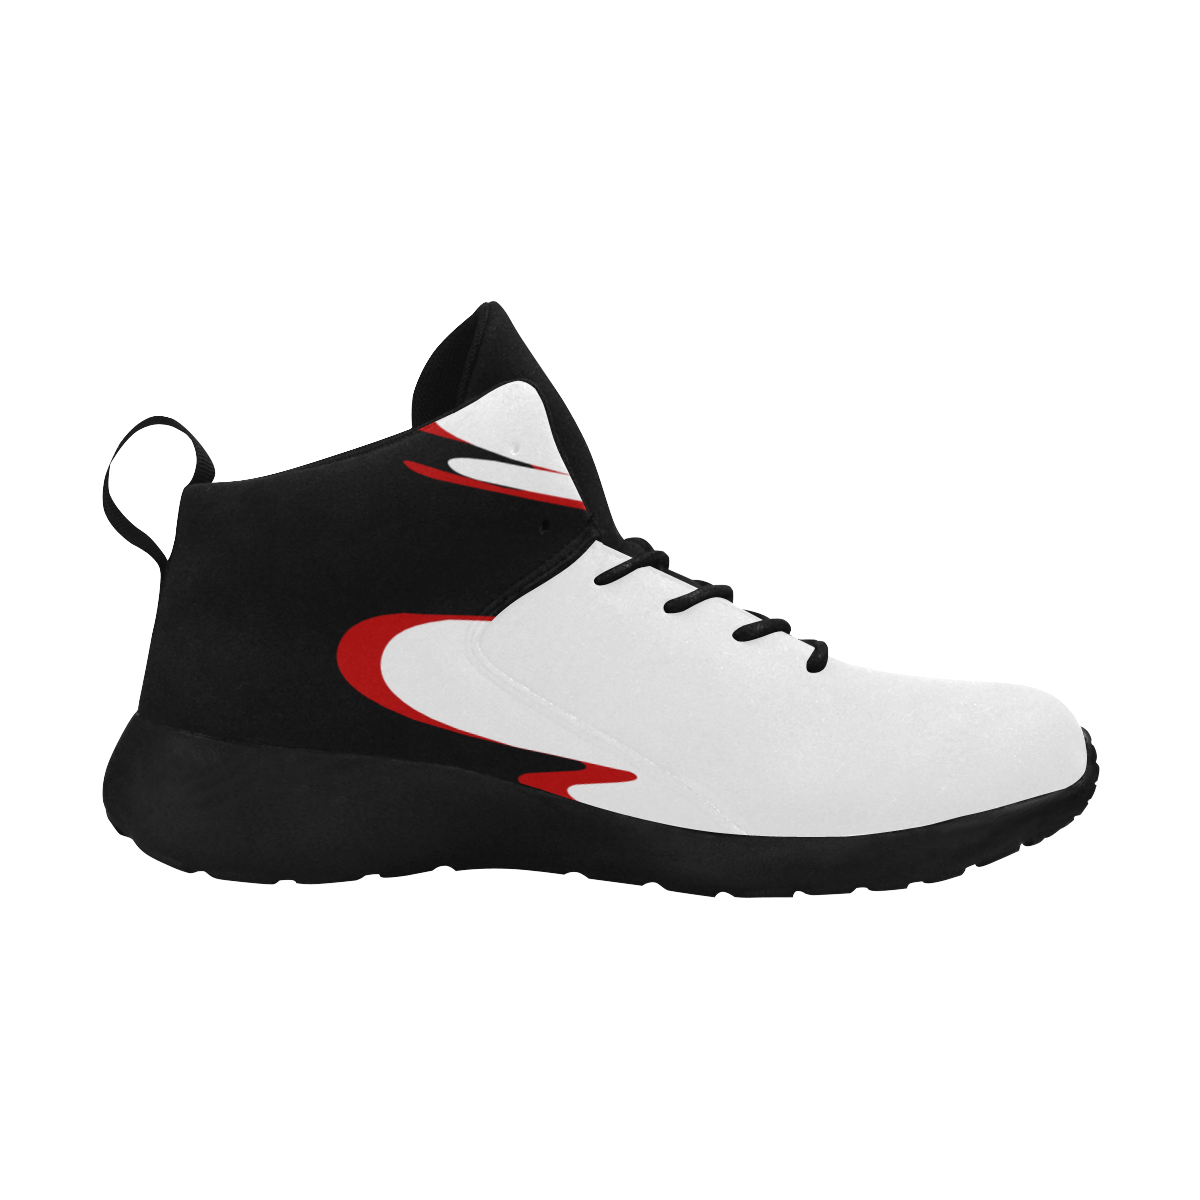 XD-VS Curve (Black/White/Red) Men's Chukka Training Shoes (Model 57502)